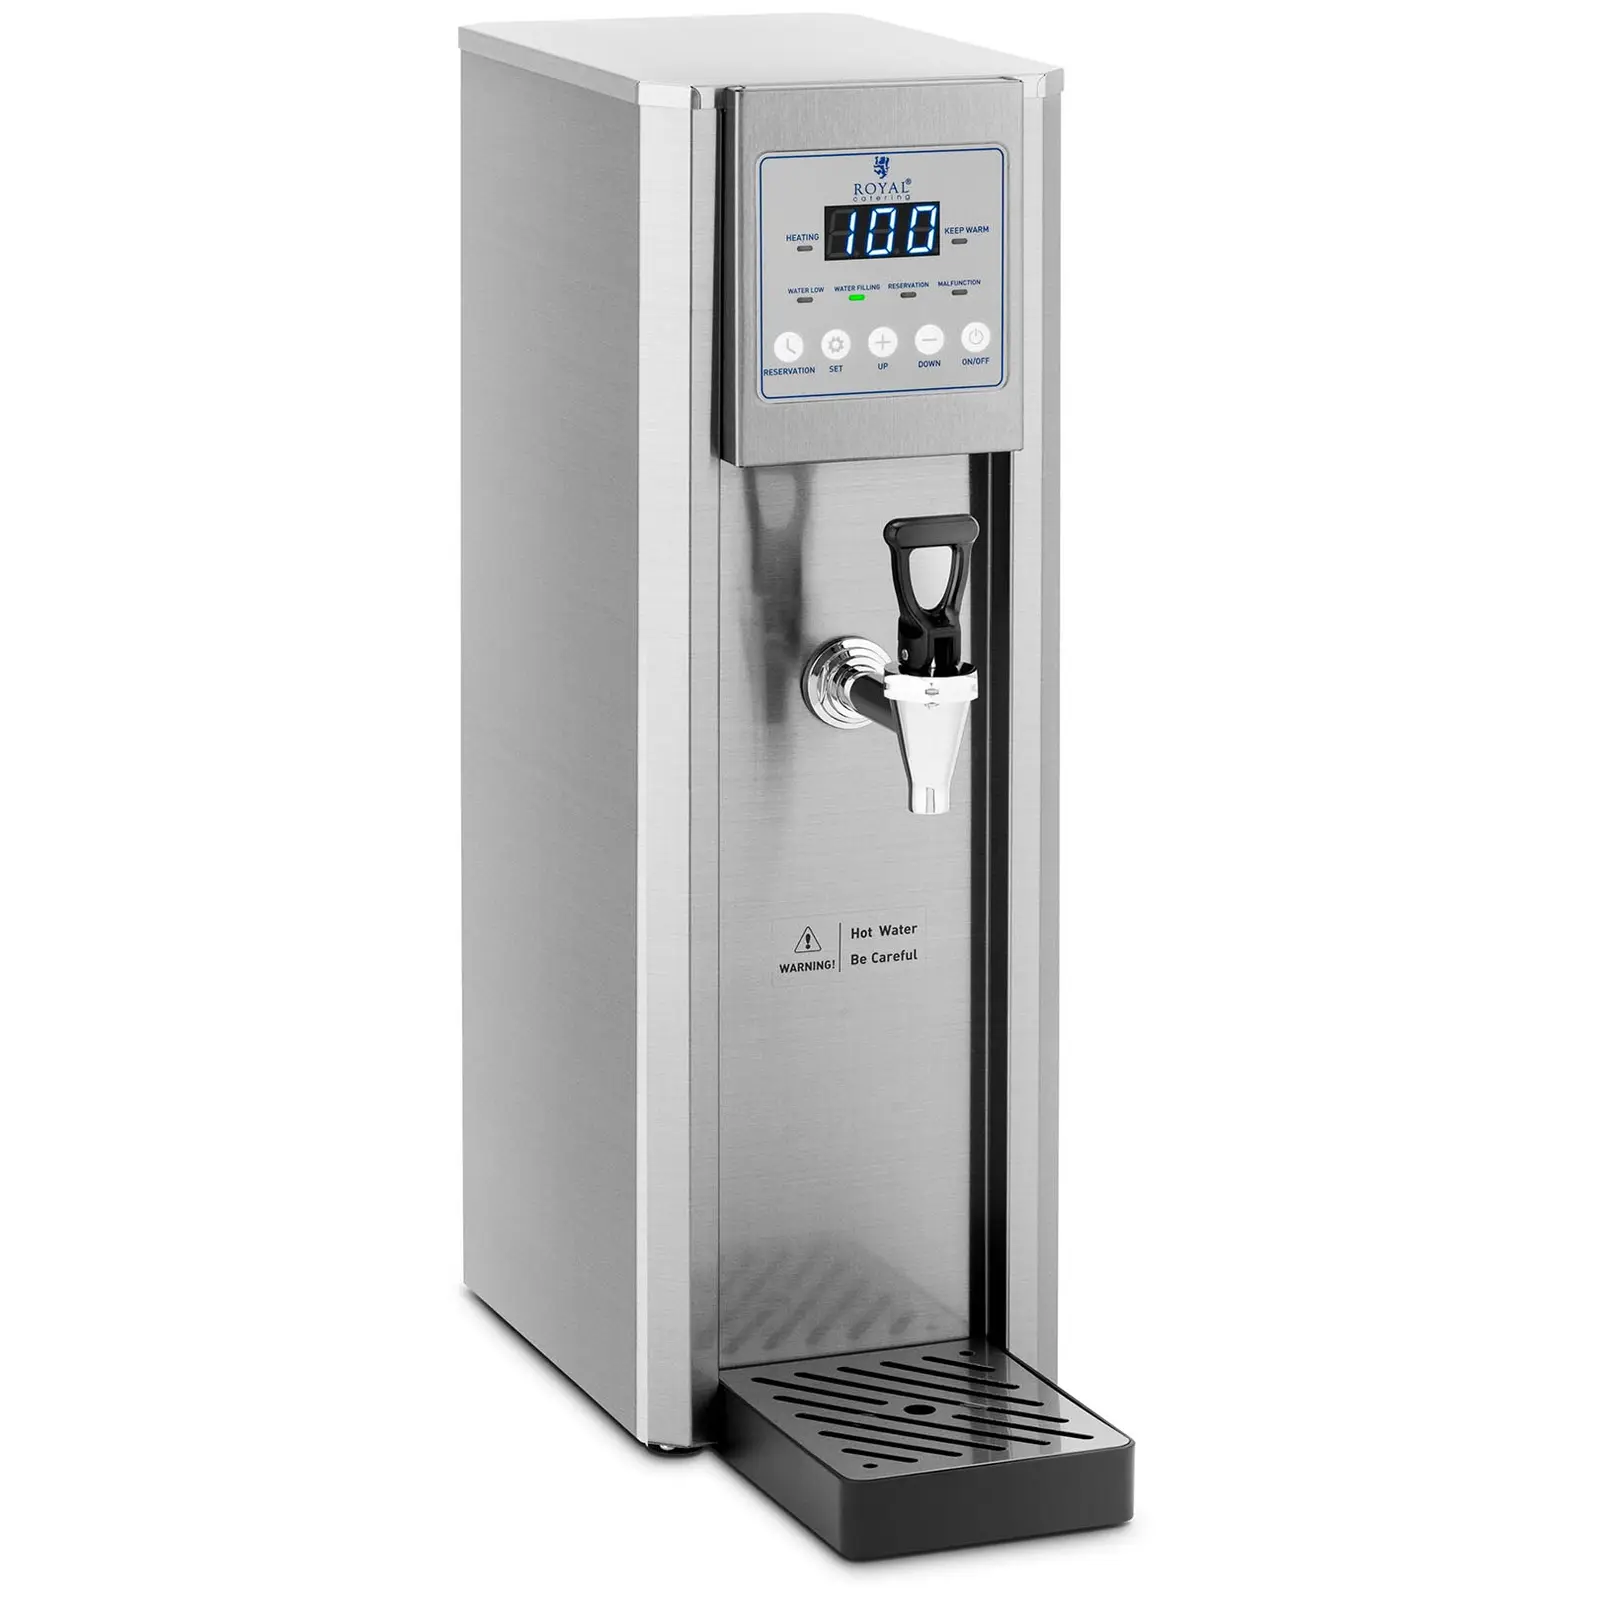 Varmvattenautomat - 8 L - 2100 W - Vattenanslutning - Royal Catering 